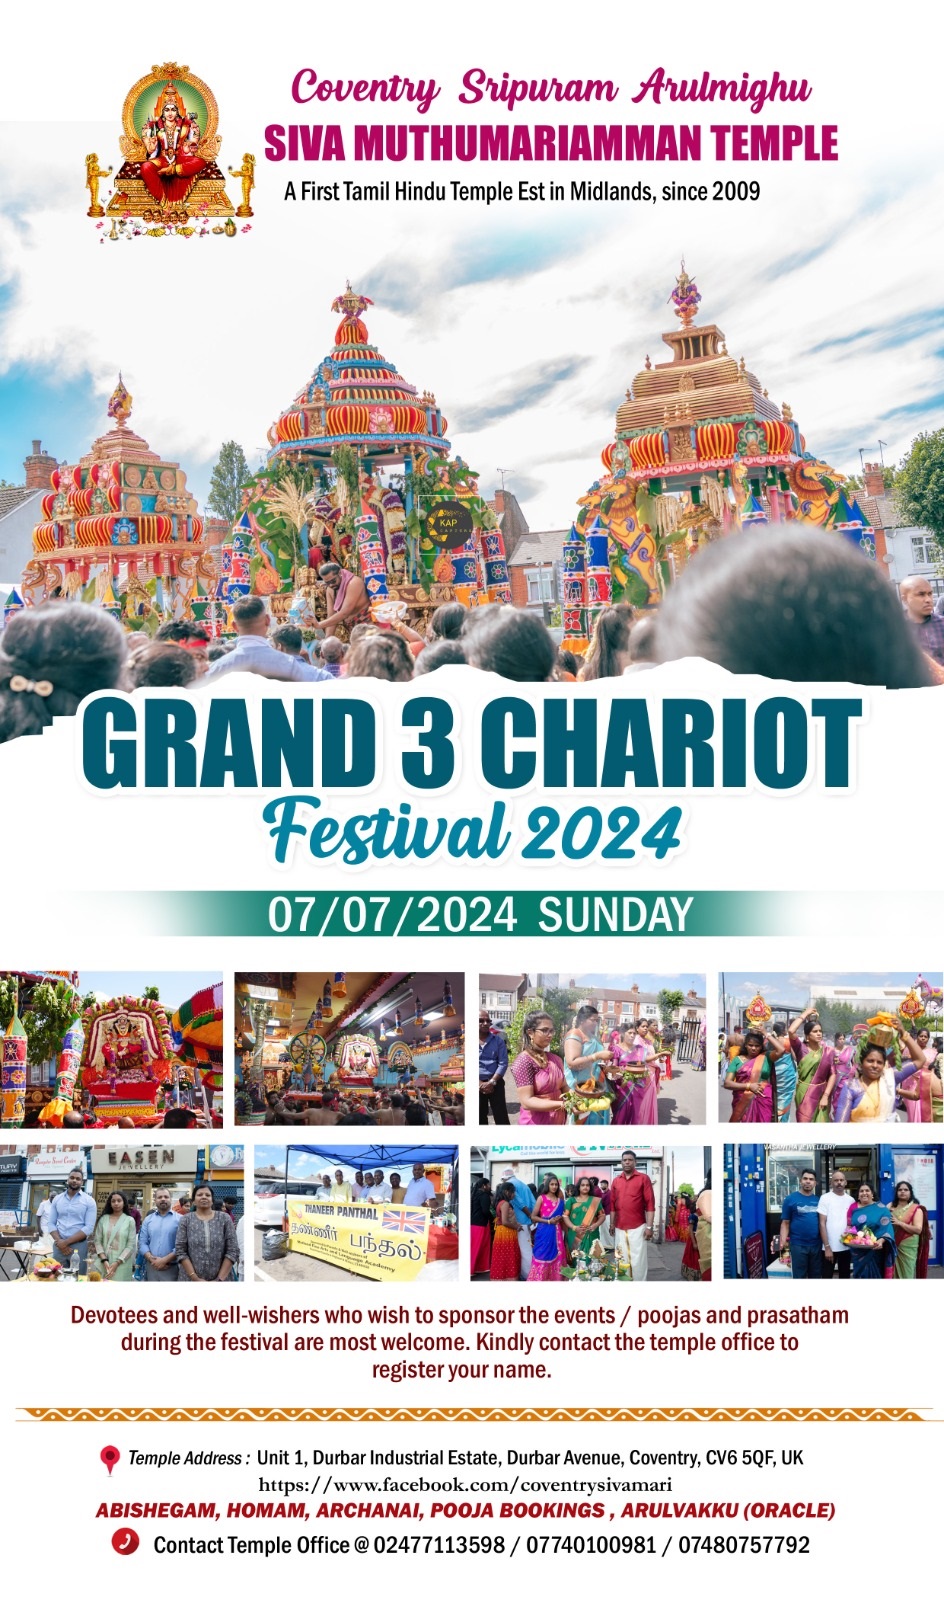 Grand 3 Chariot Festival 2024